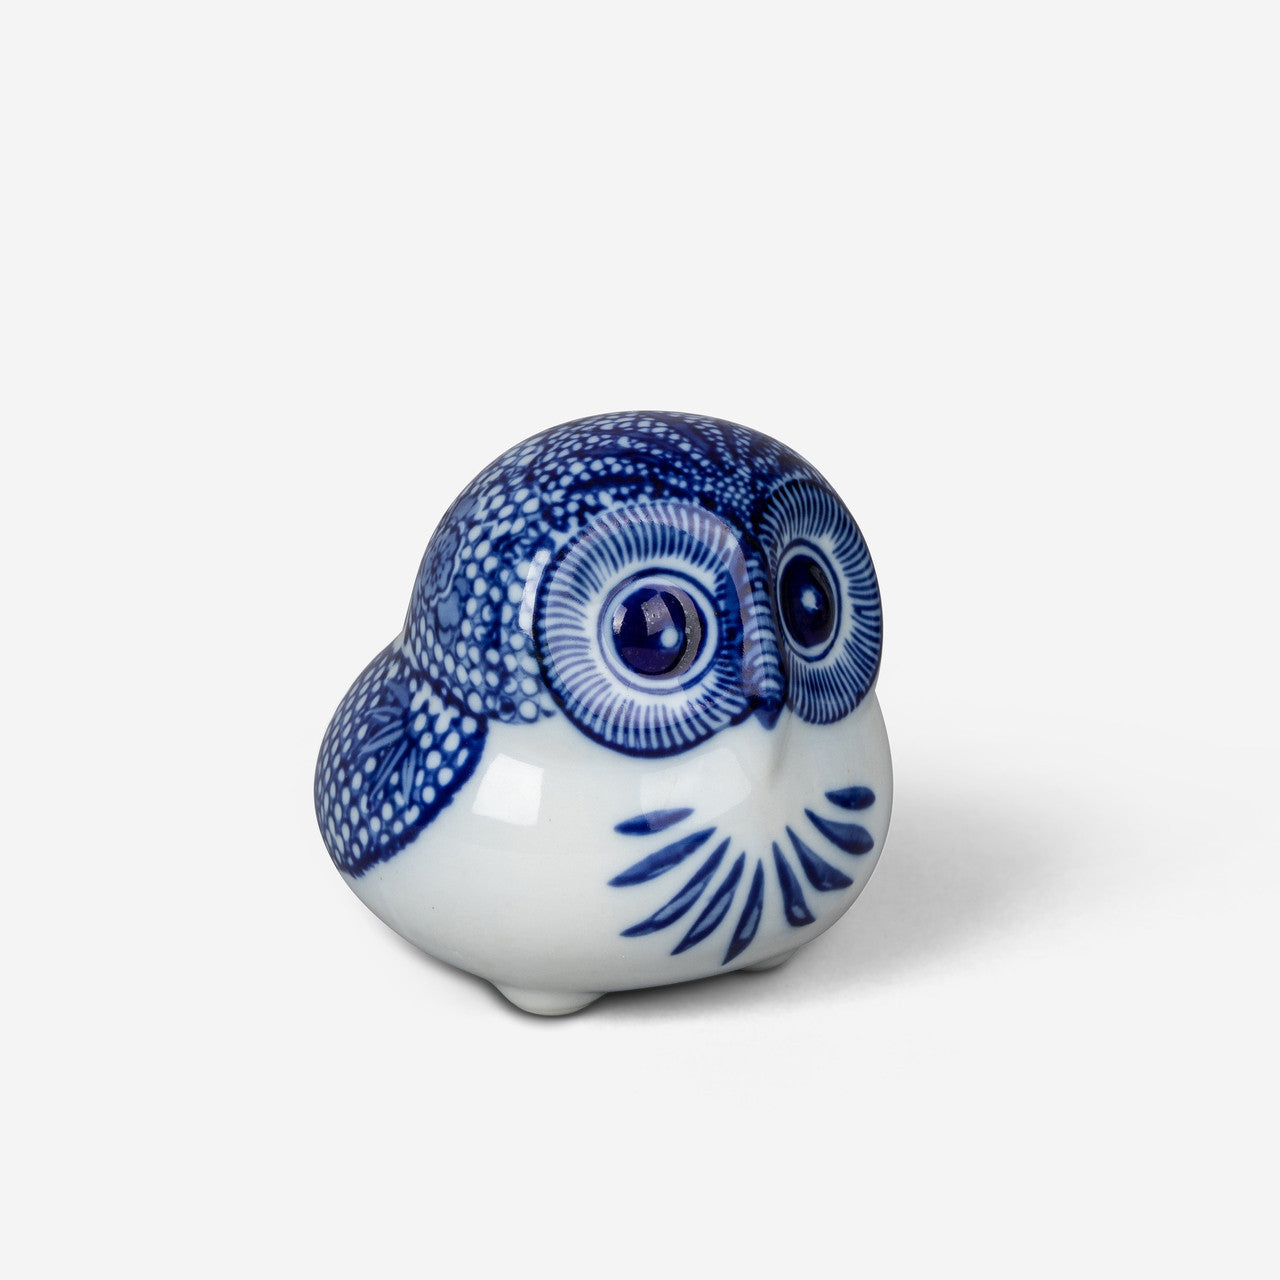 Baby Owl Ceramic Figurine